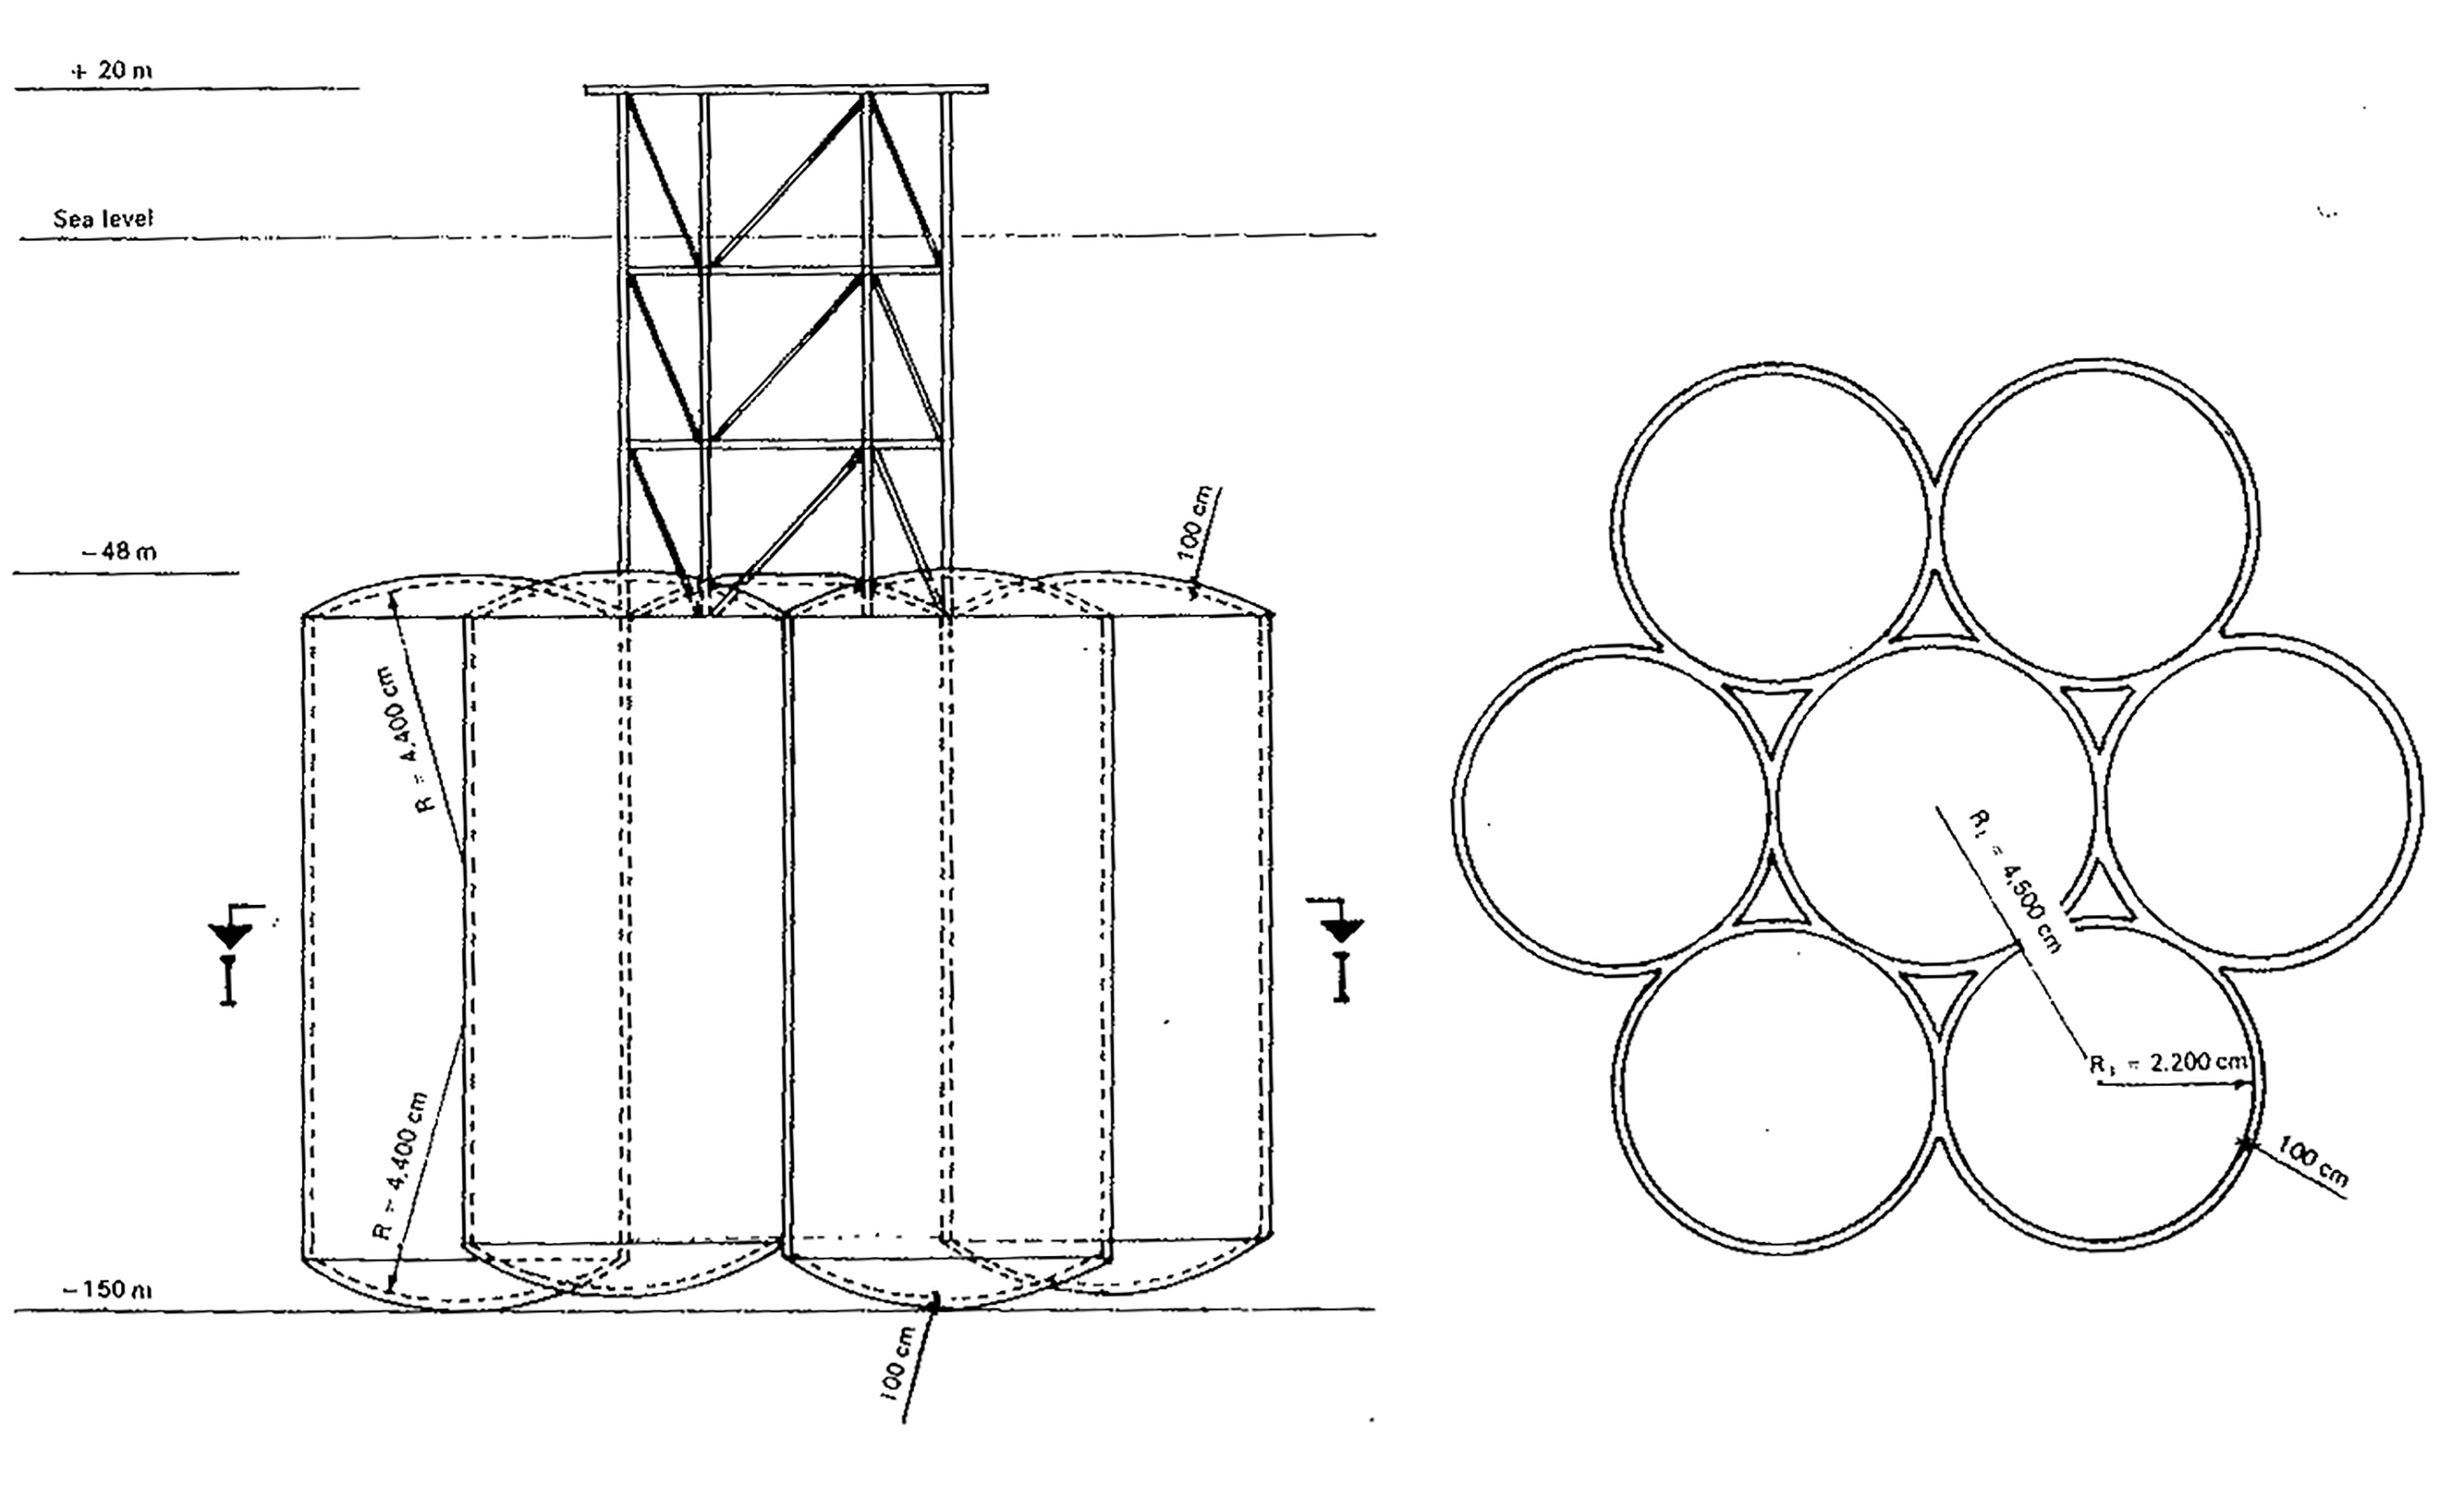 Figure 2: Høyer-Ellefsen’s first suggestion for a concrete platform structure (1970) – an early Condeep experiment. Source: Øyvind Steen, På dypt vann. Norwegian Contractors 1973 – 1993 (Oslo : Norwegian Contractors, 1993), 7.